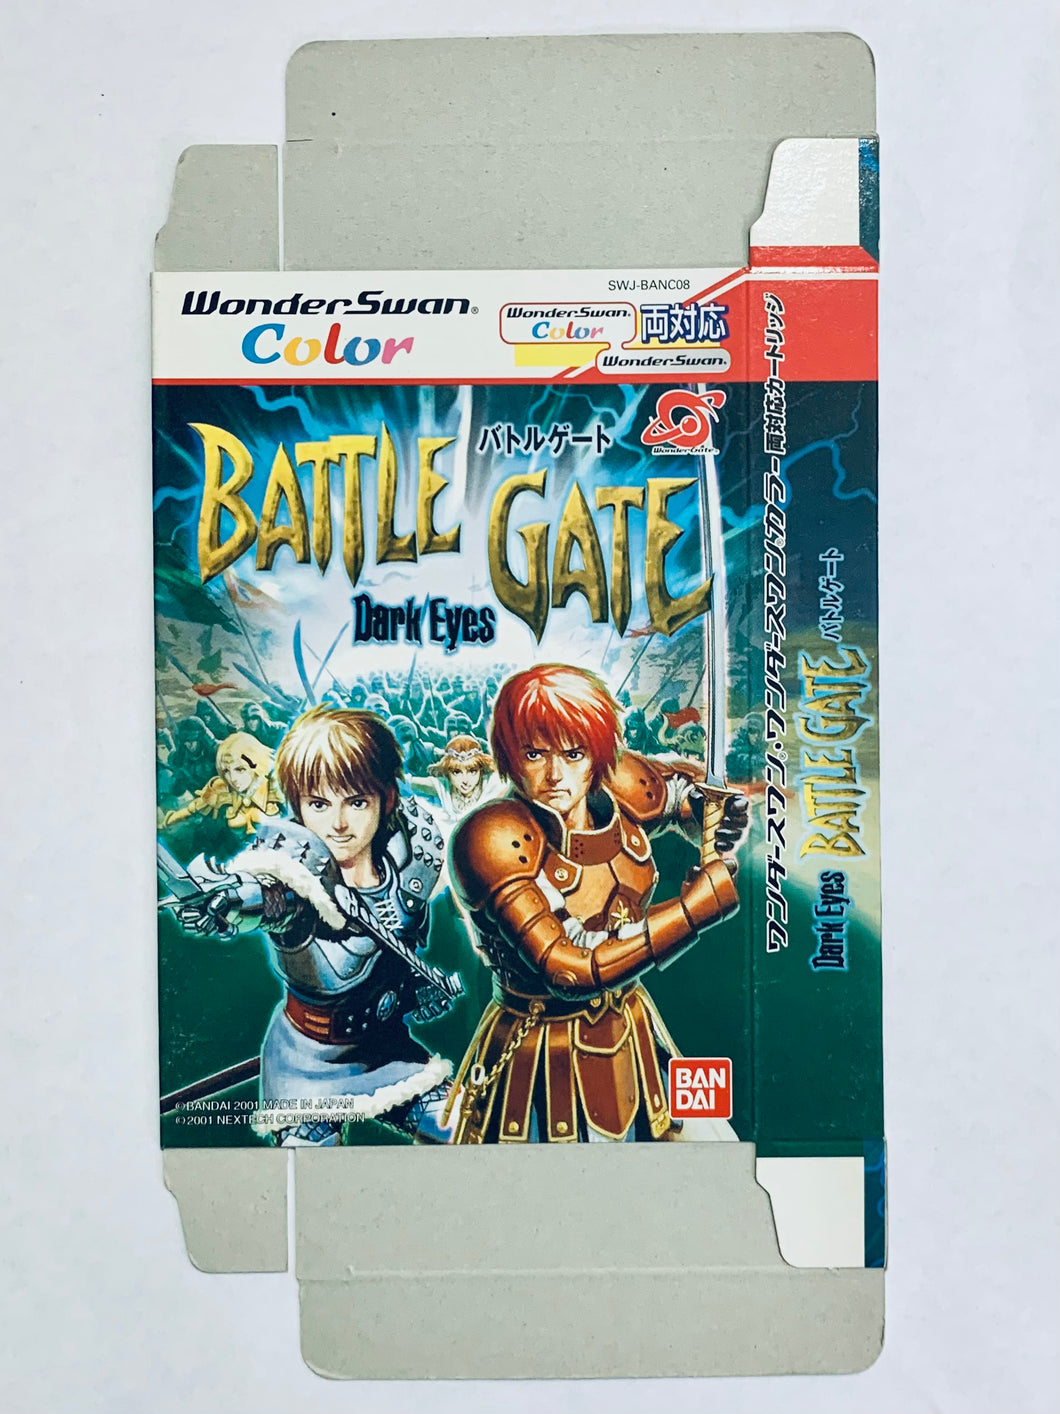 Dark Eyes: BattleGate - WonderSwan Color - WSC - JP - Box Only (SWJ-BANC08)